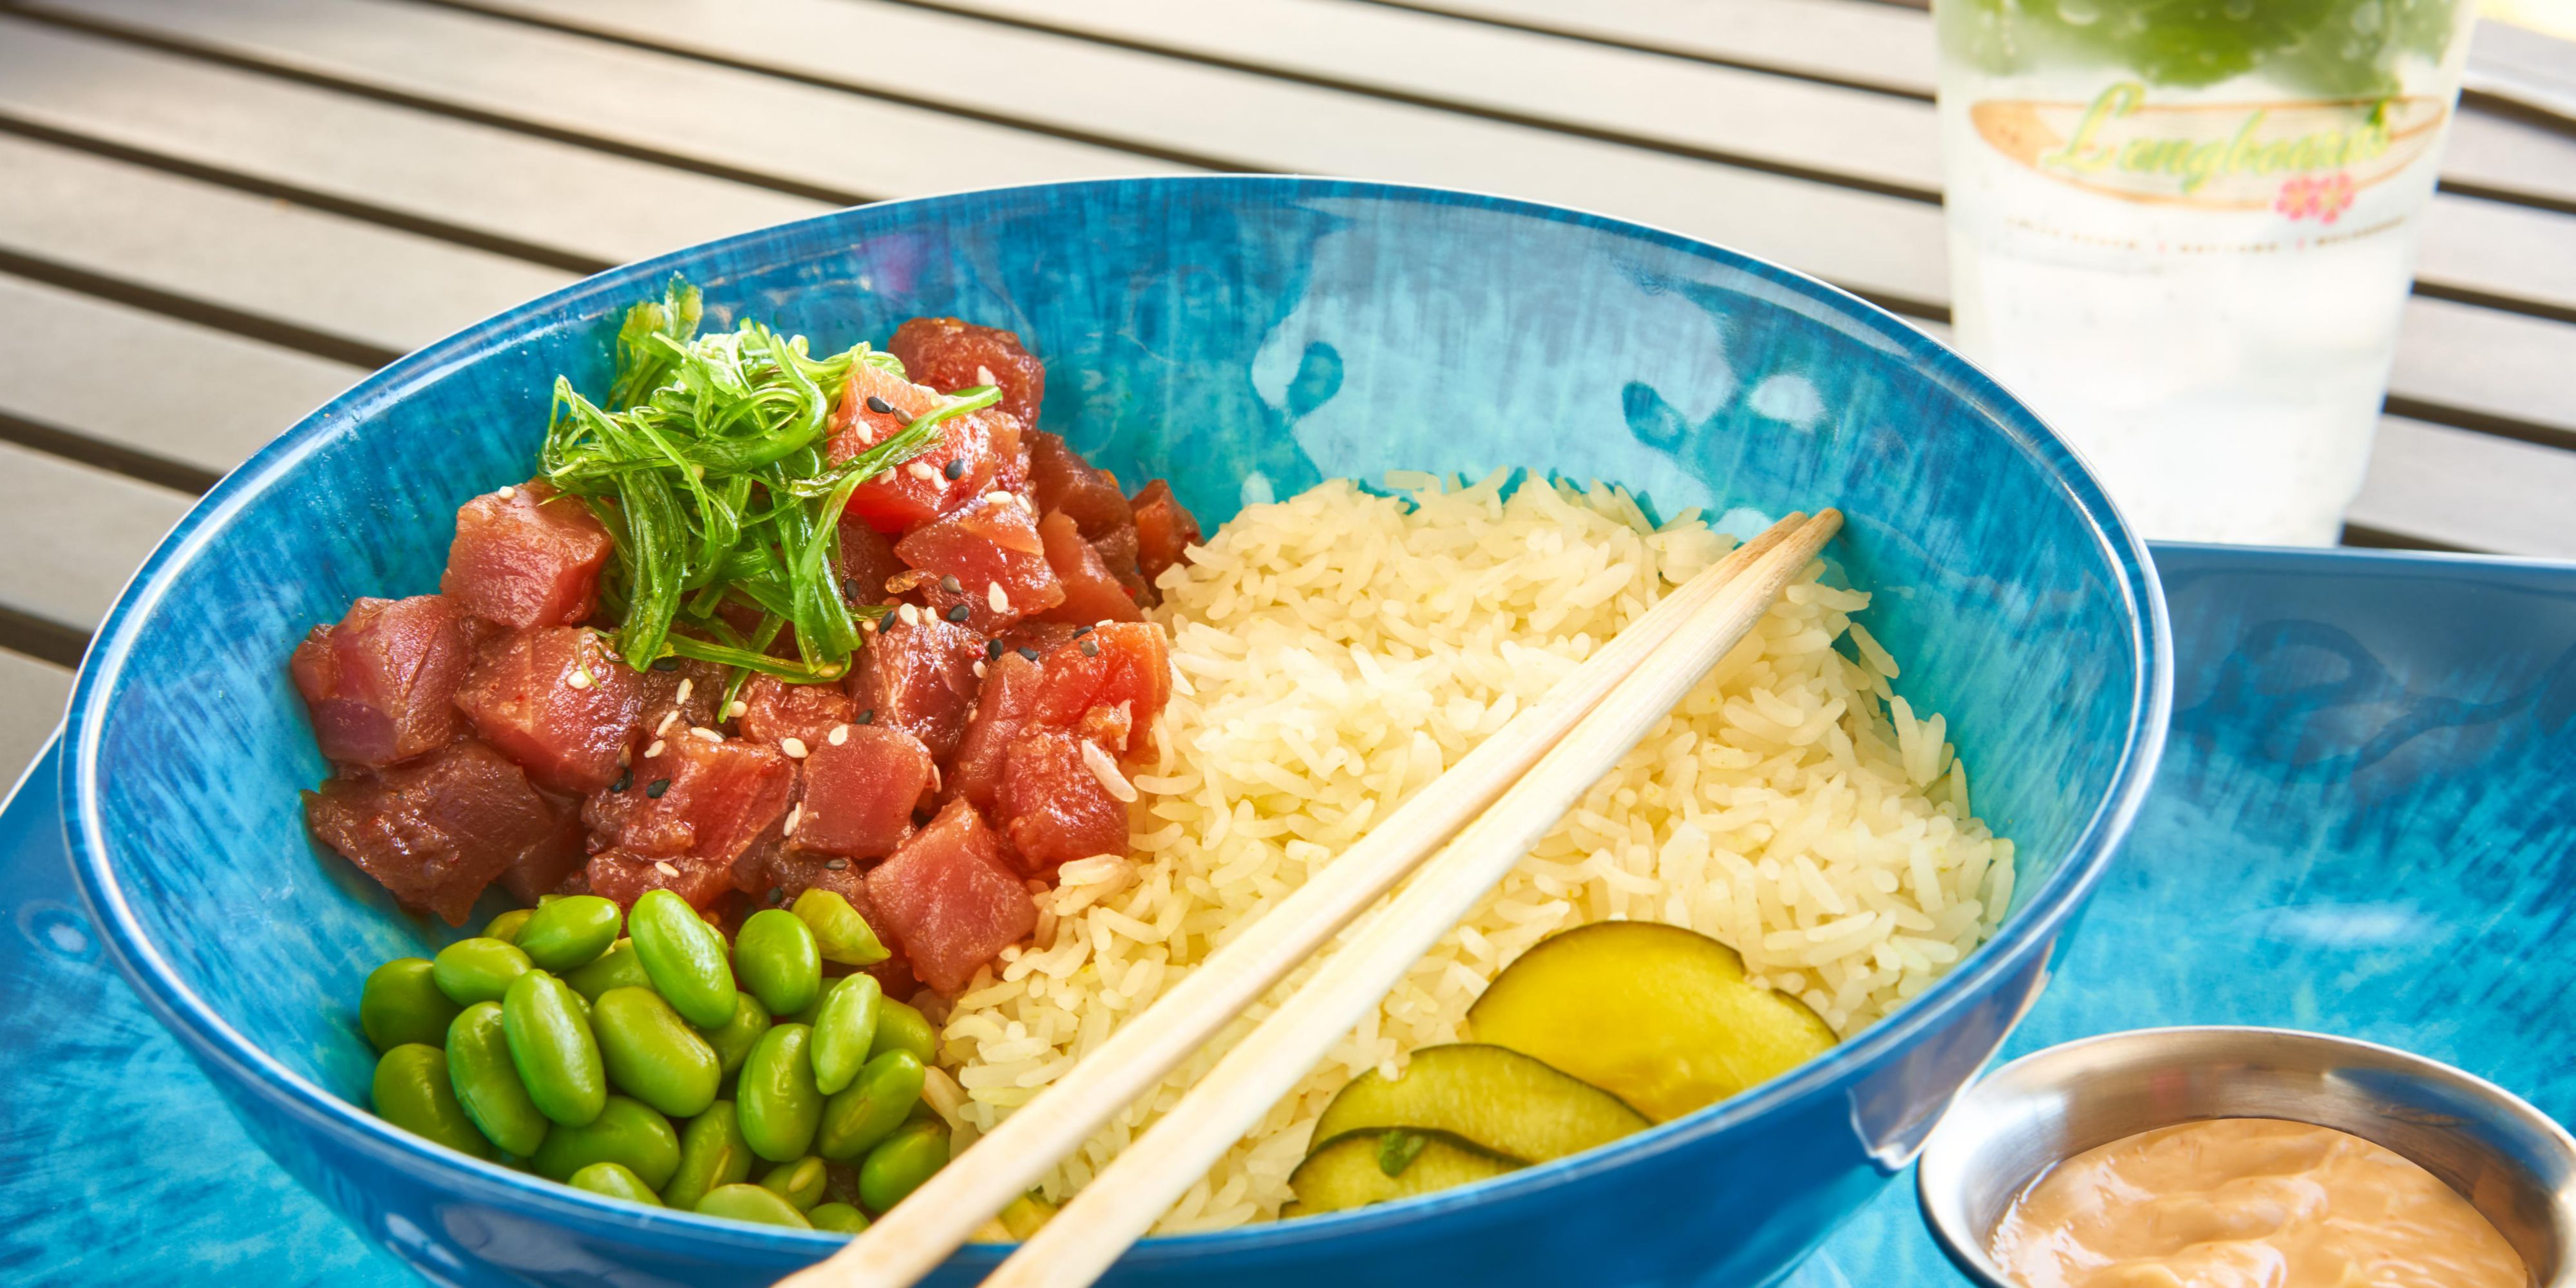 Our restaurant serves the best Ahi Tuna Poke Bowl.